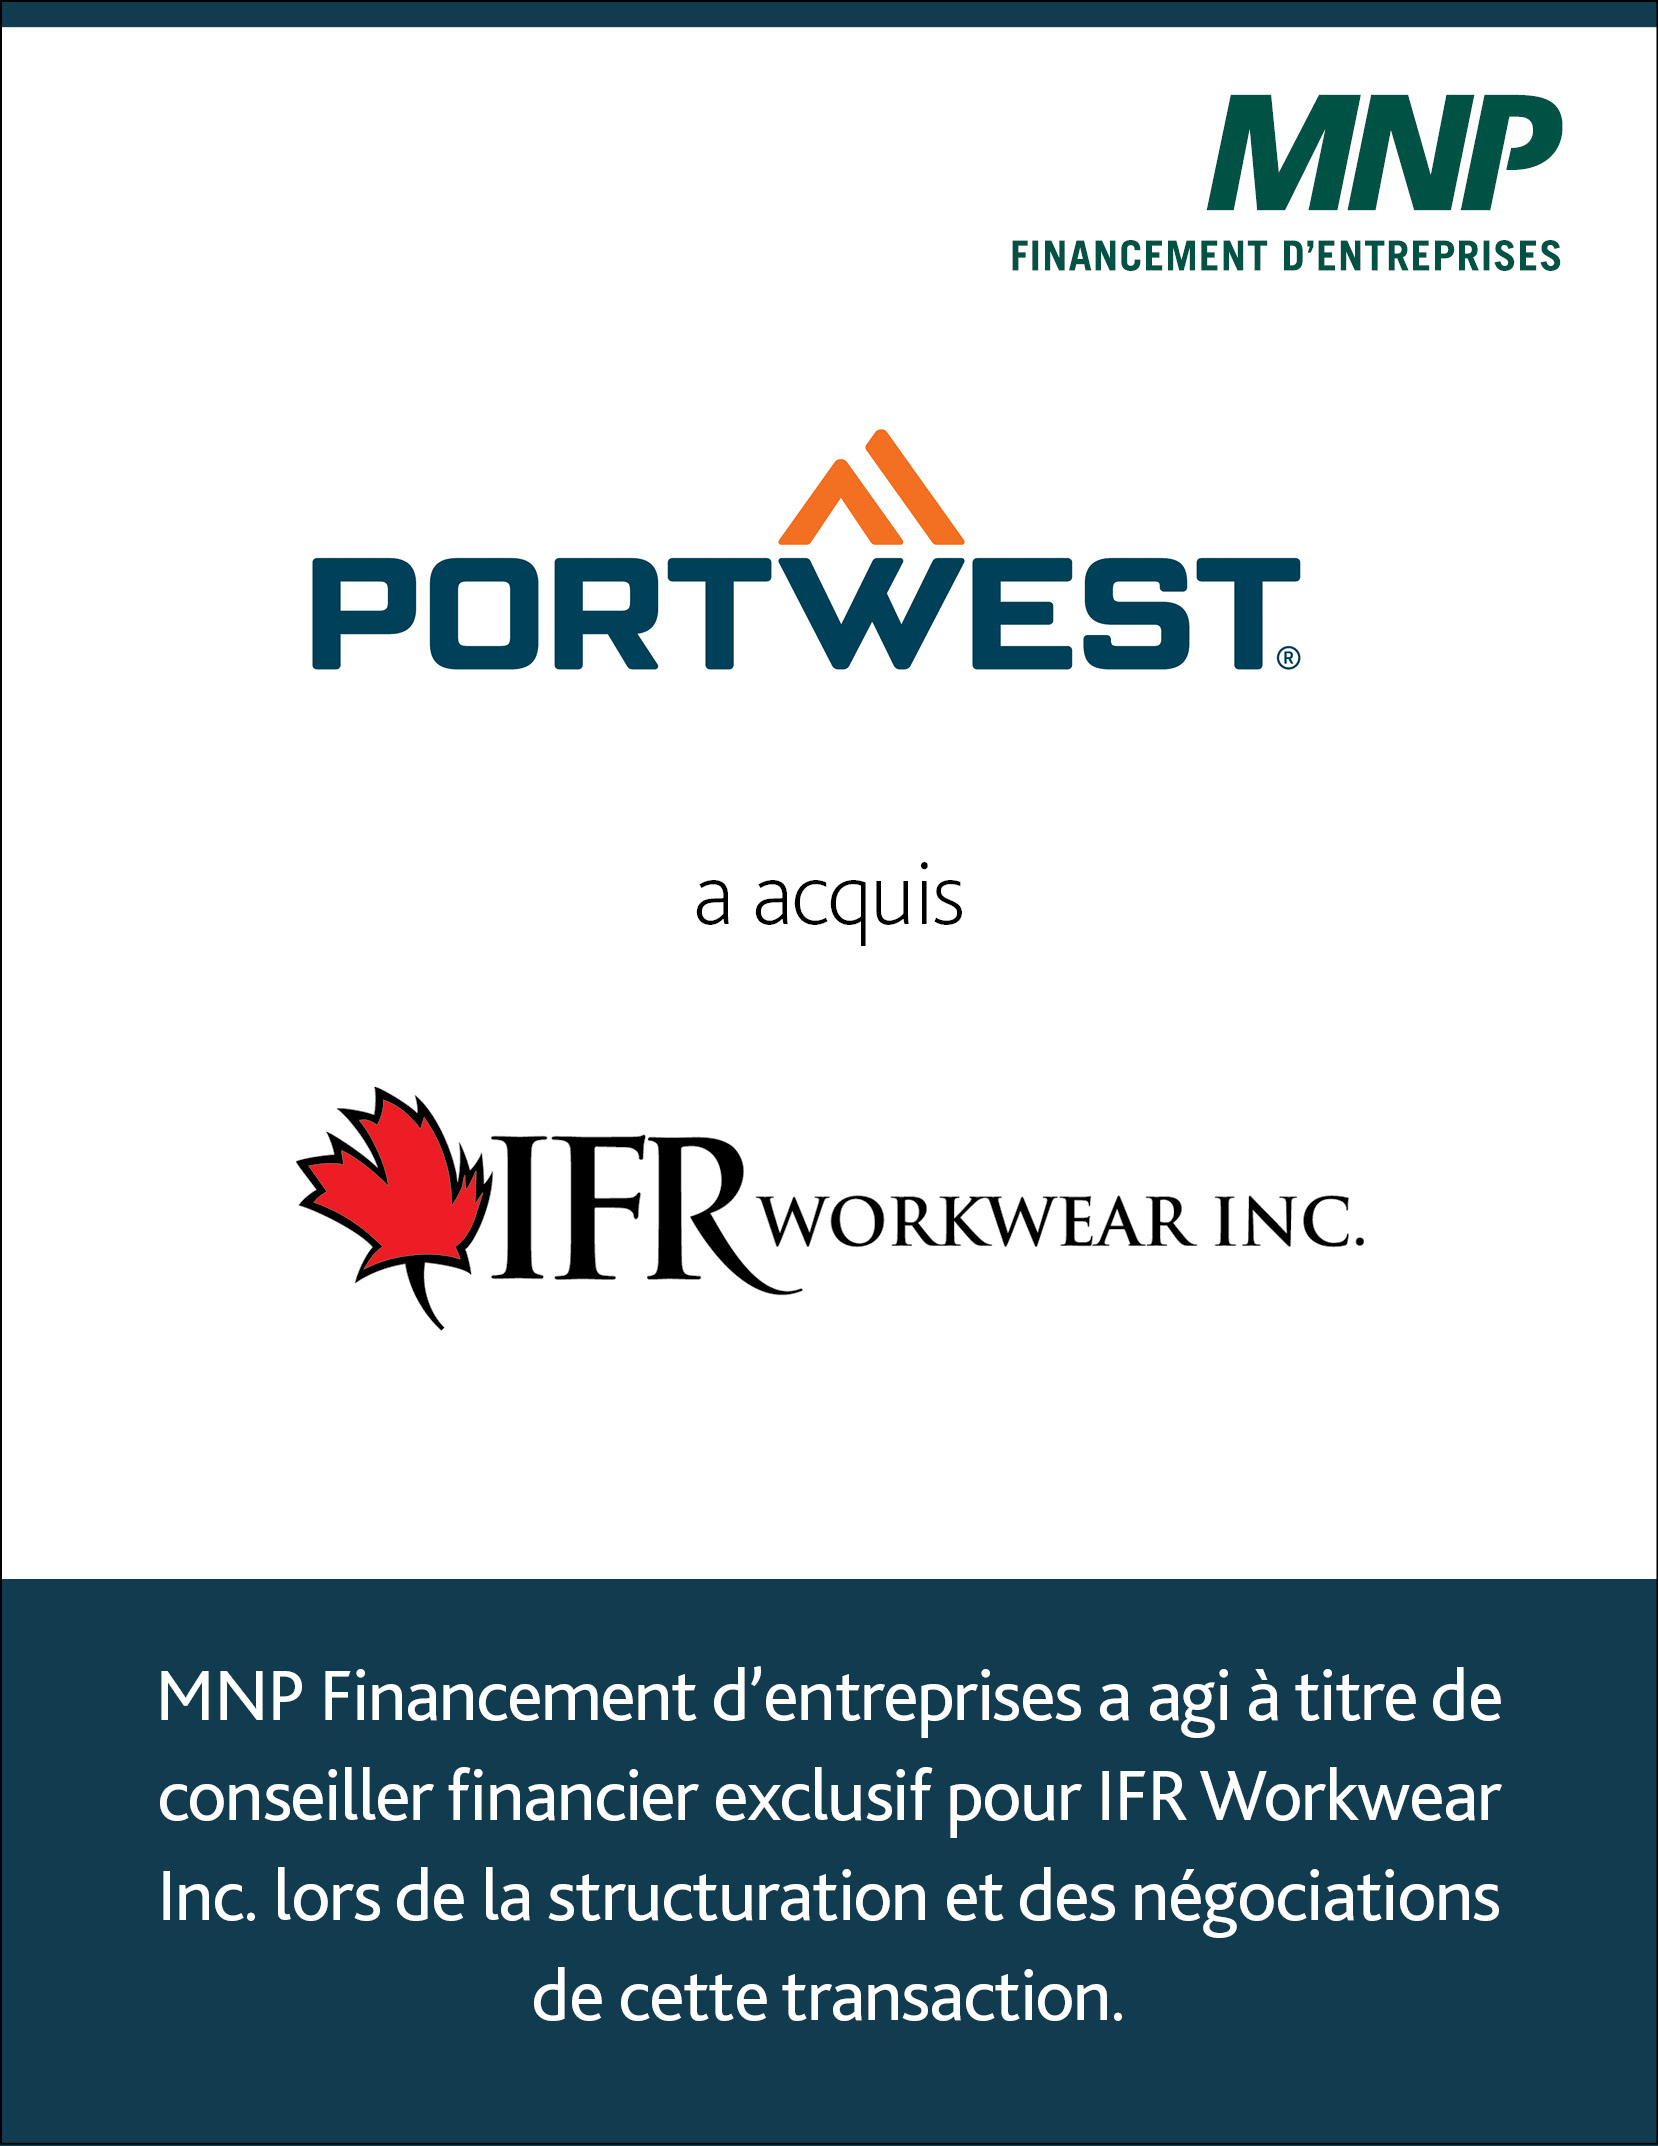 Portwest a acquis IFR Workwear inc.